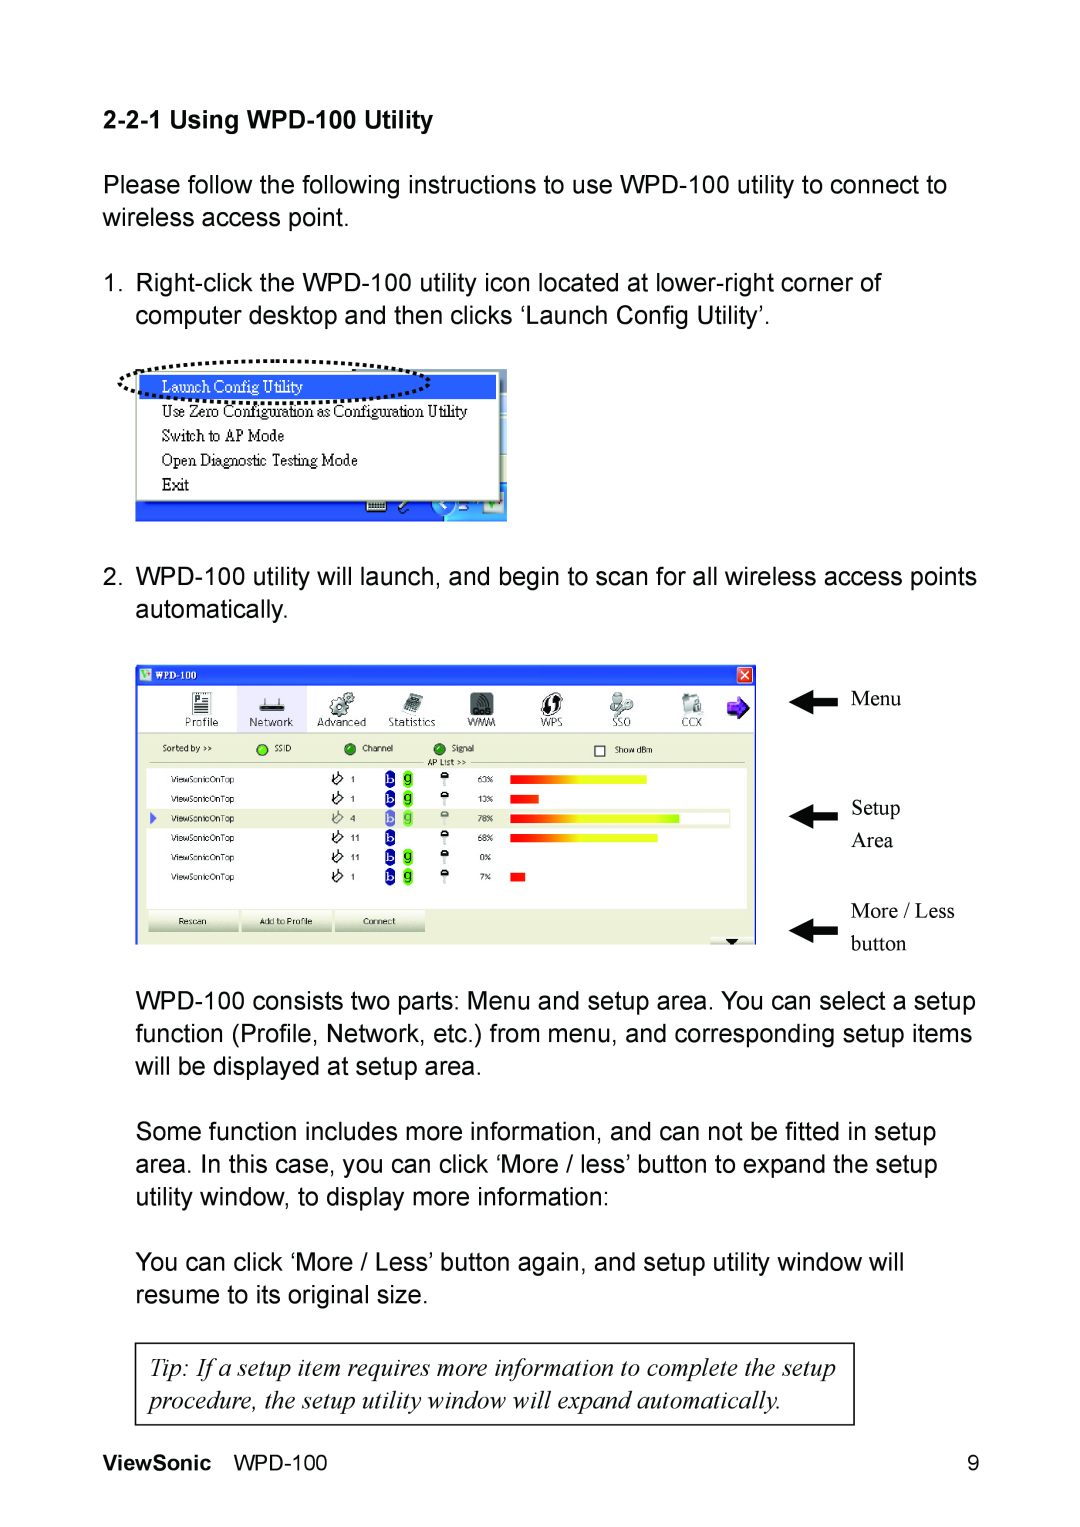 ViewSonic VS13789 manual 2-2-1Using WPD-100Utility, Menu Setup Area More / Less button 